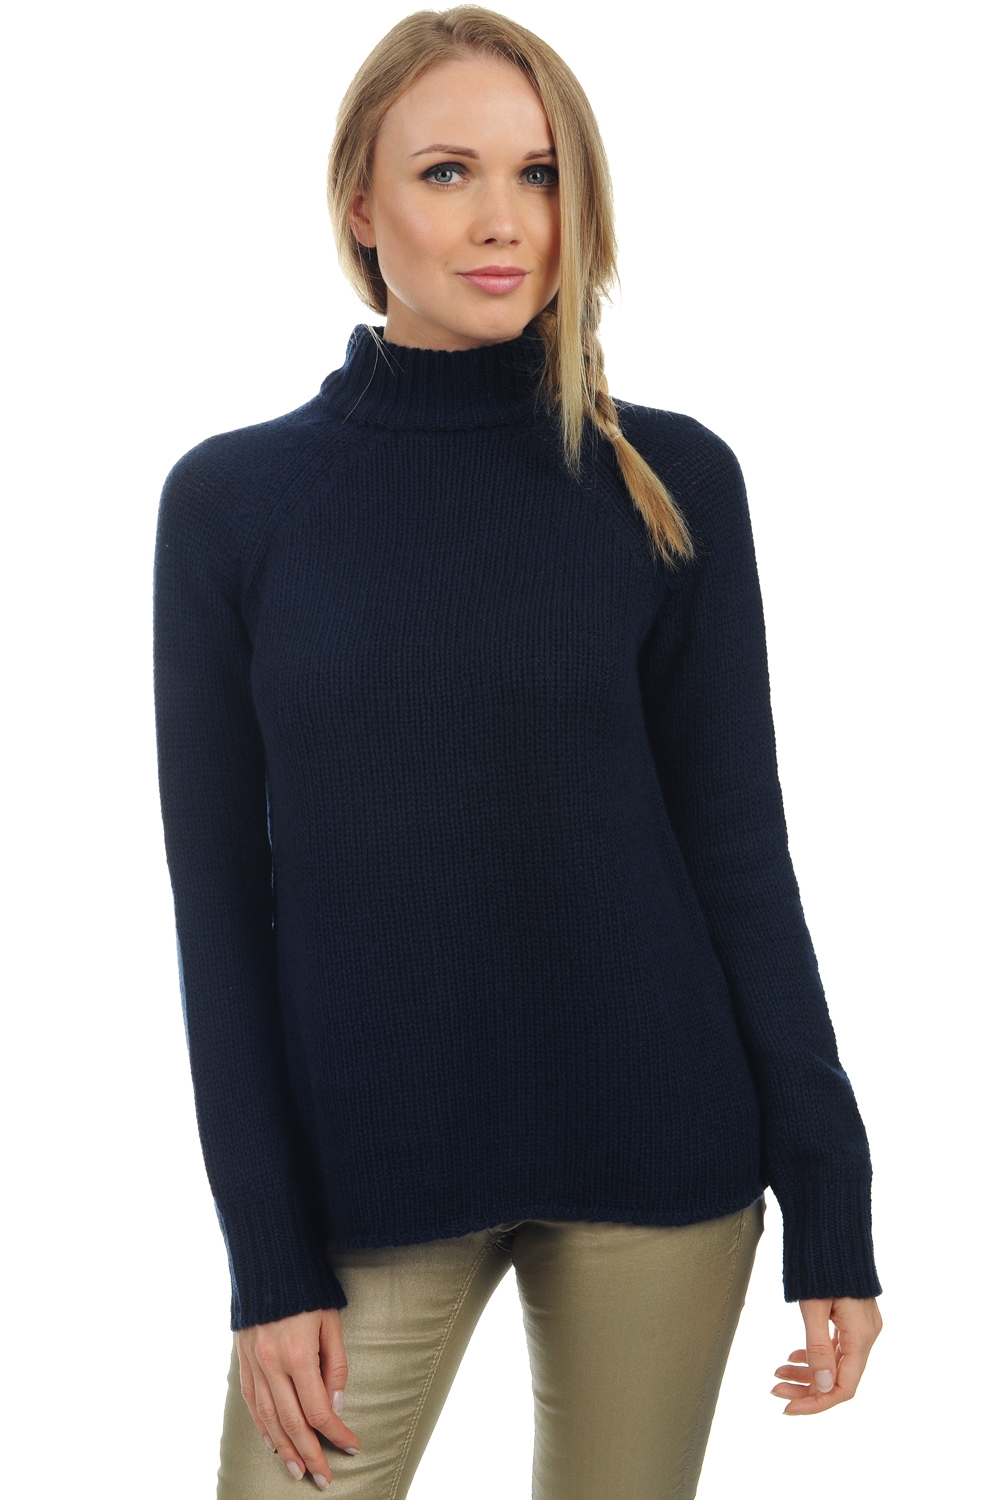 Cashmere ladies chunky sweater louisa dress blue 4xl